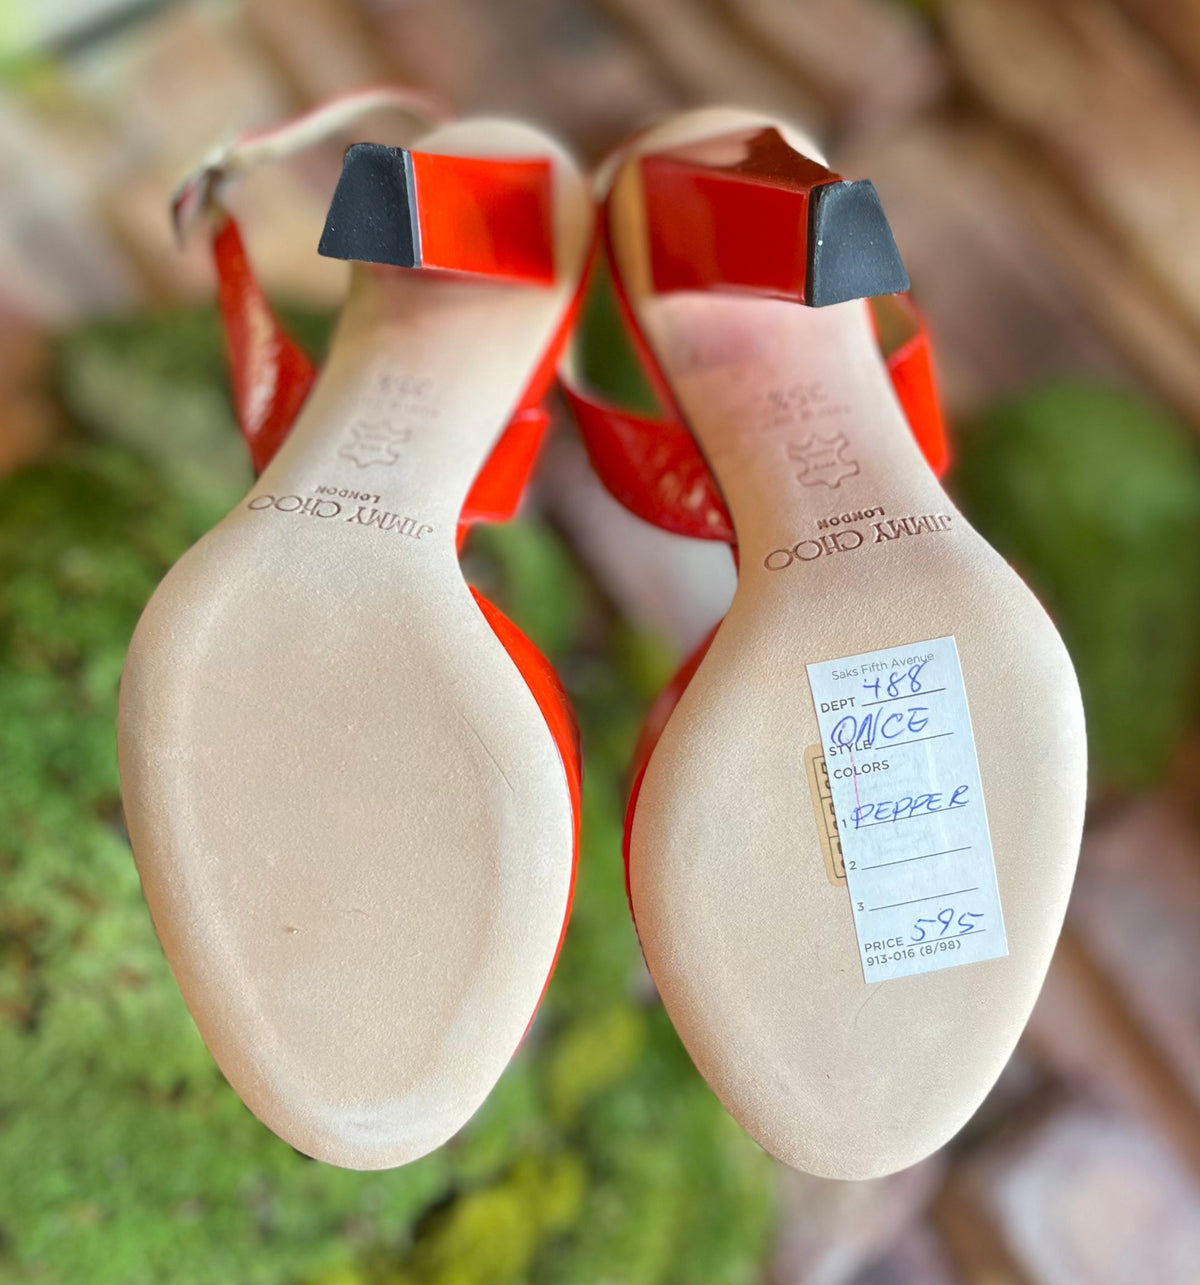 JIMMY CHOO Orange Patent Leather Sling Back Heels SZ 35.5